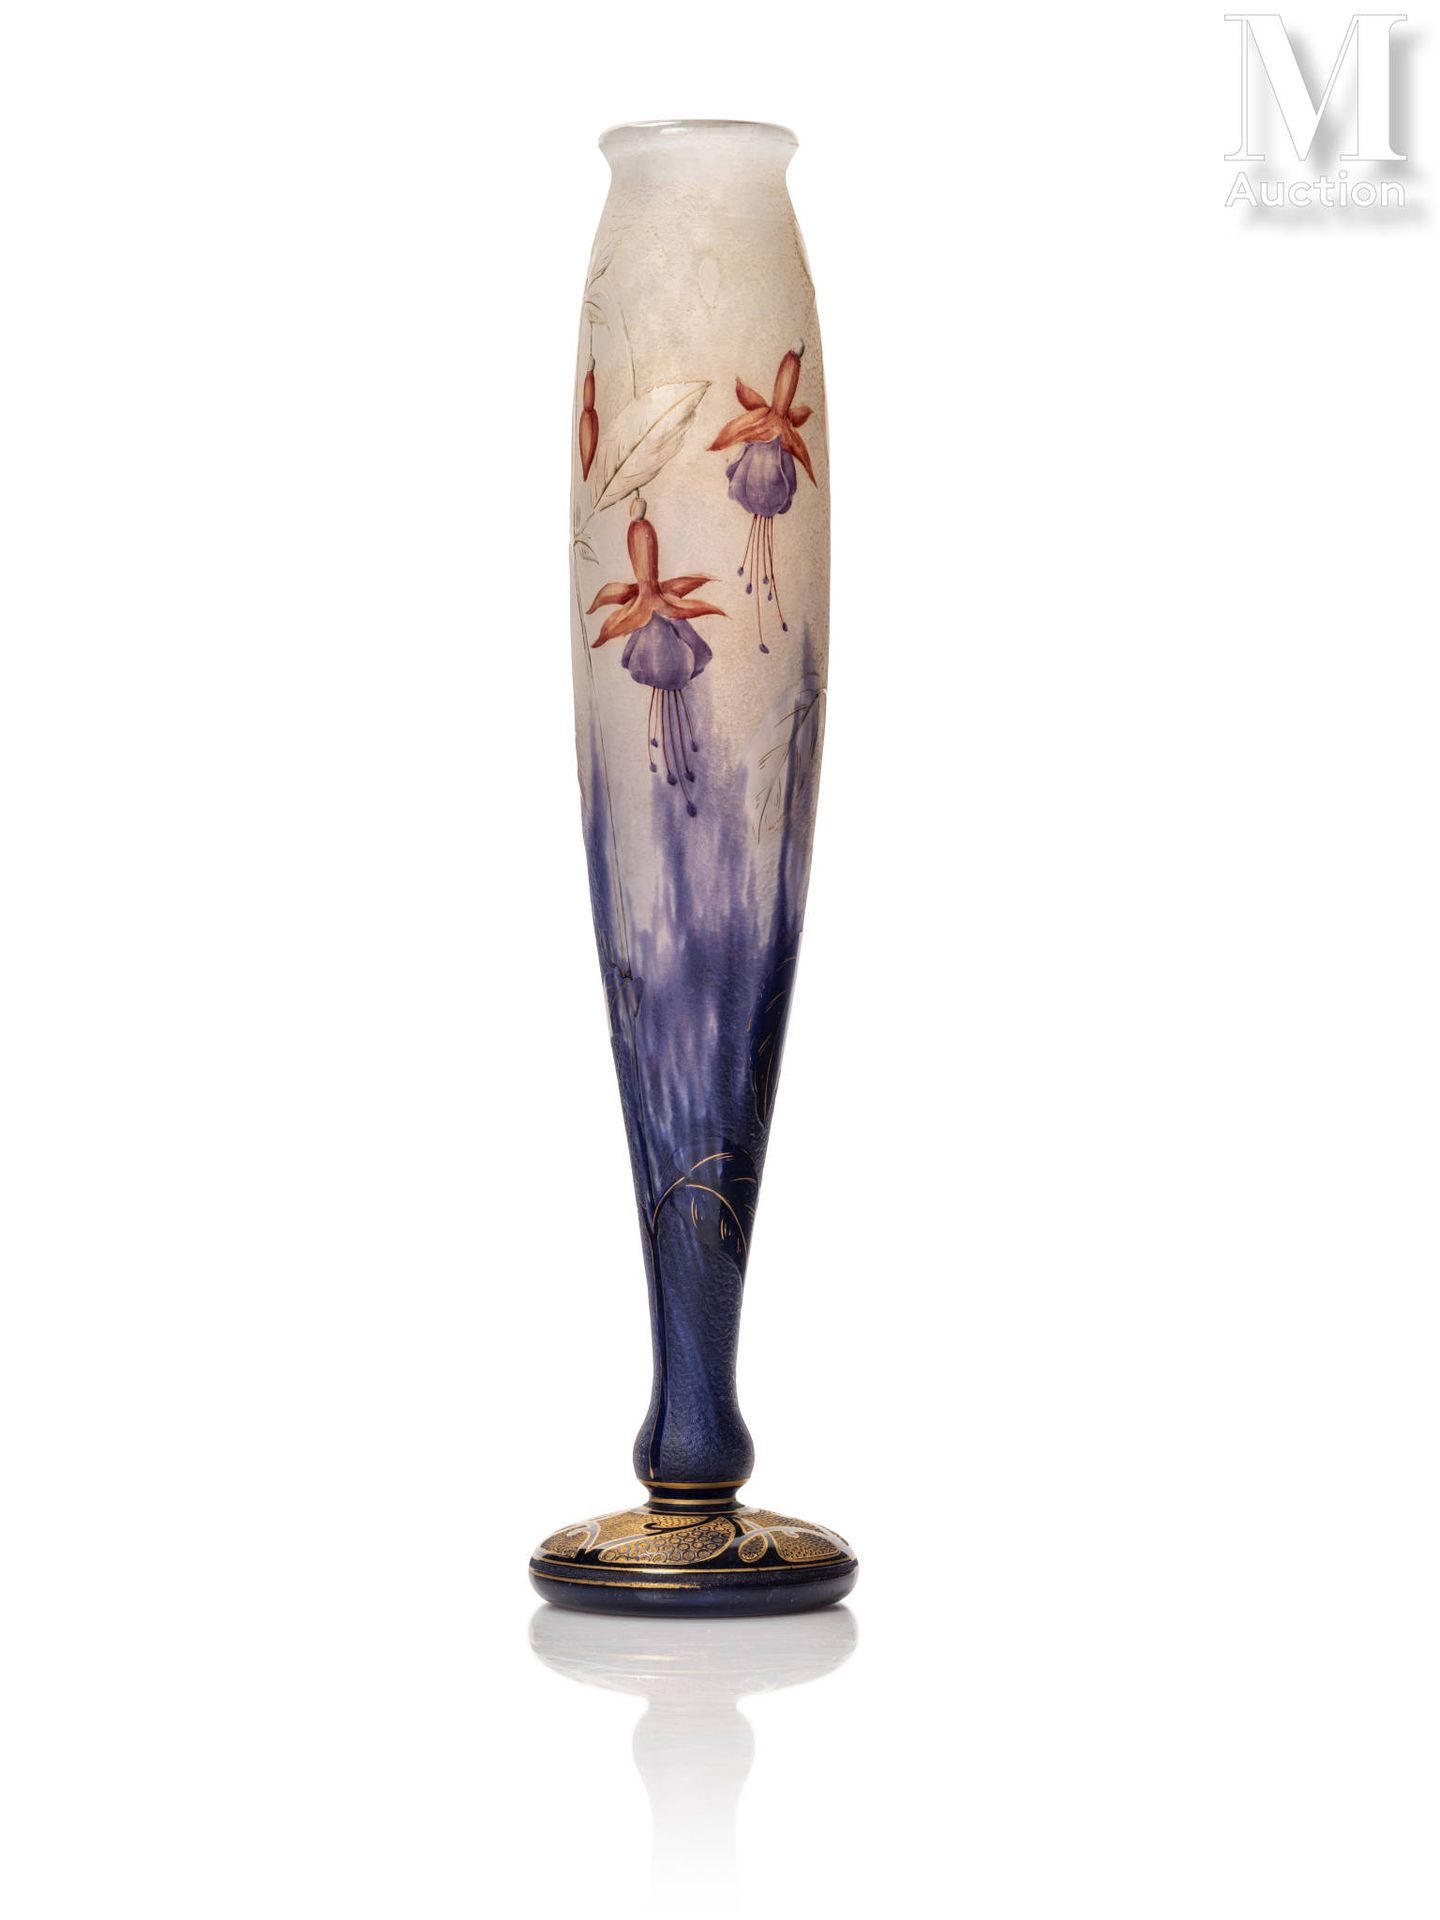 DAUM - Nancy "Fuschias"

Circa 1890

Double thick glass vase, with a circular ba&hellip;